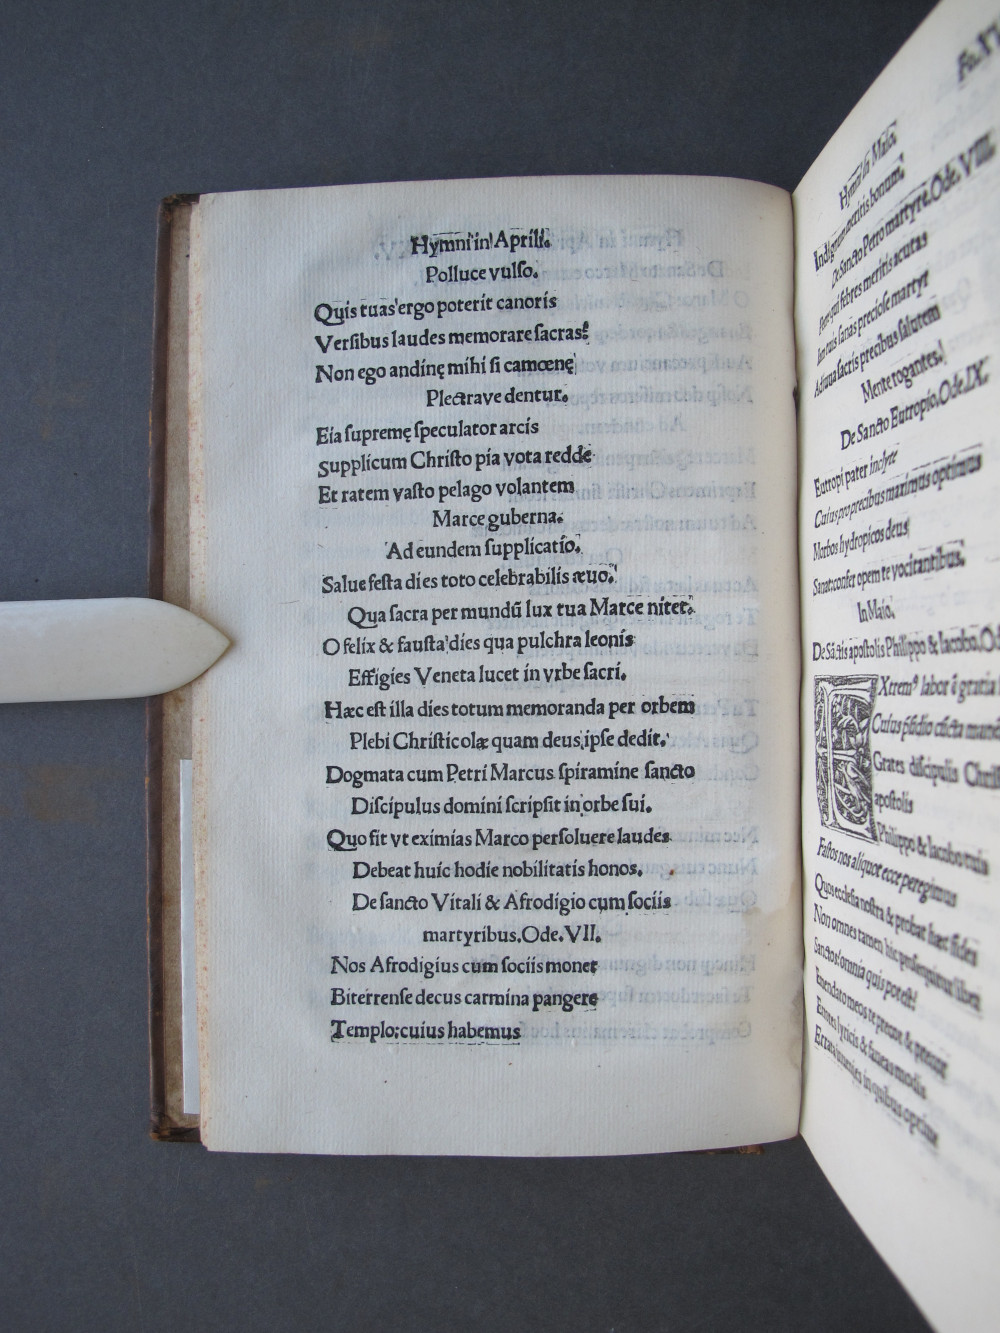 Folio 15 verso